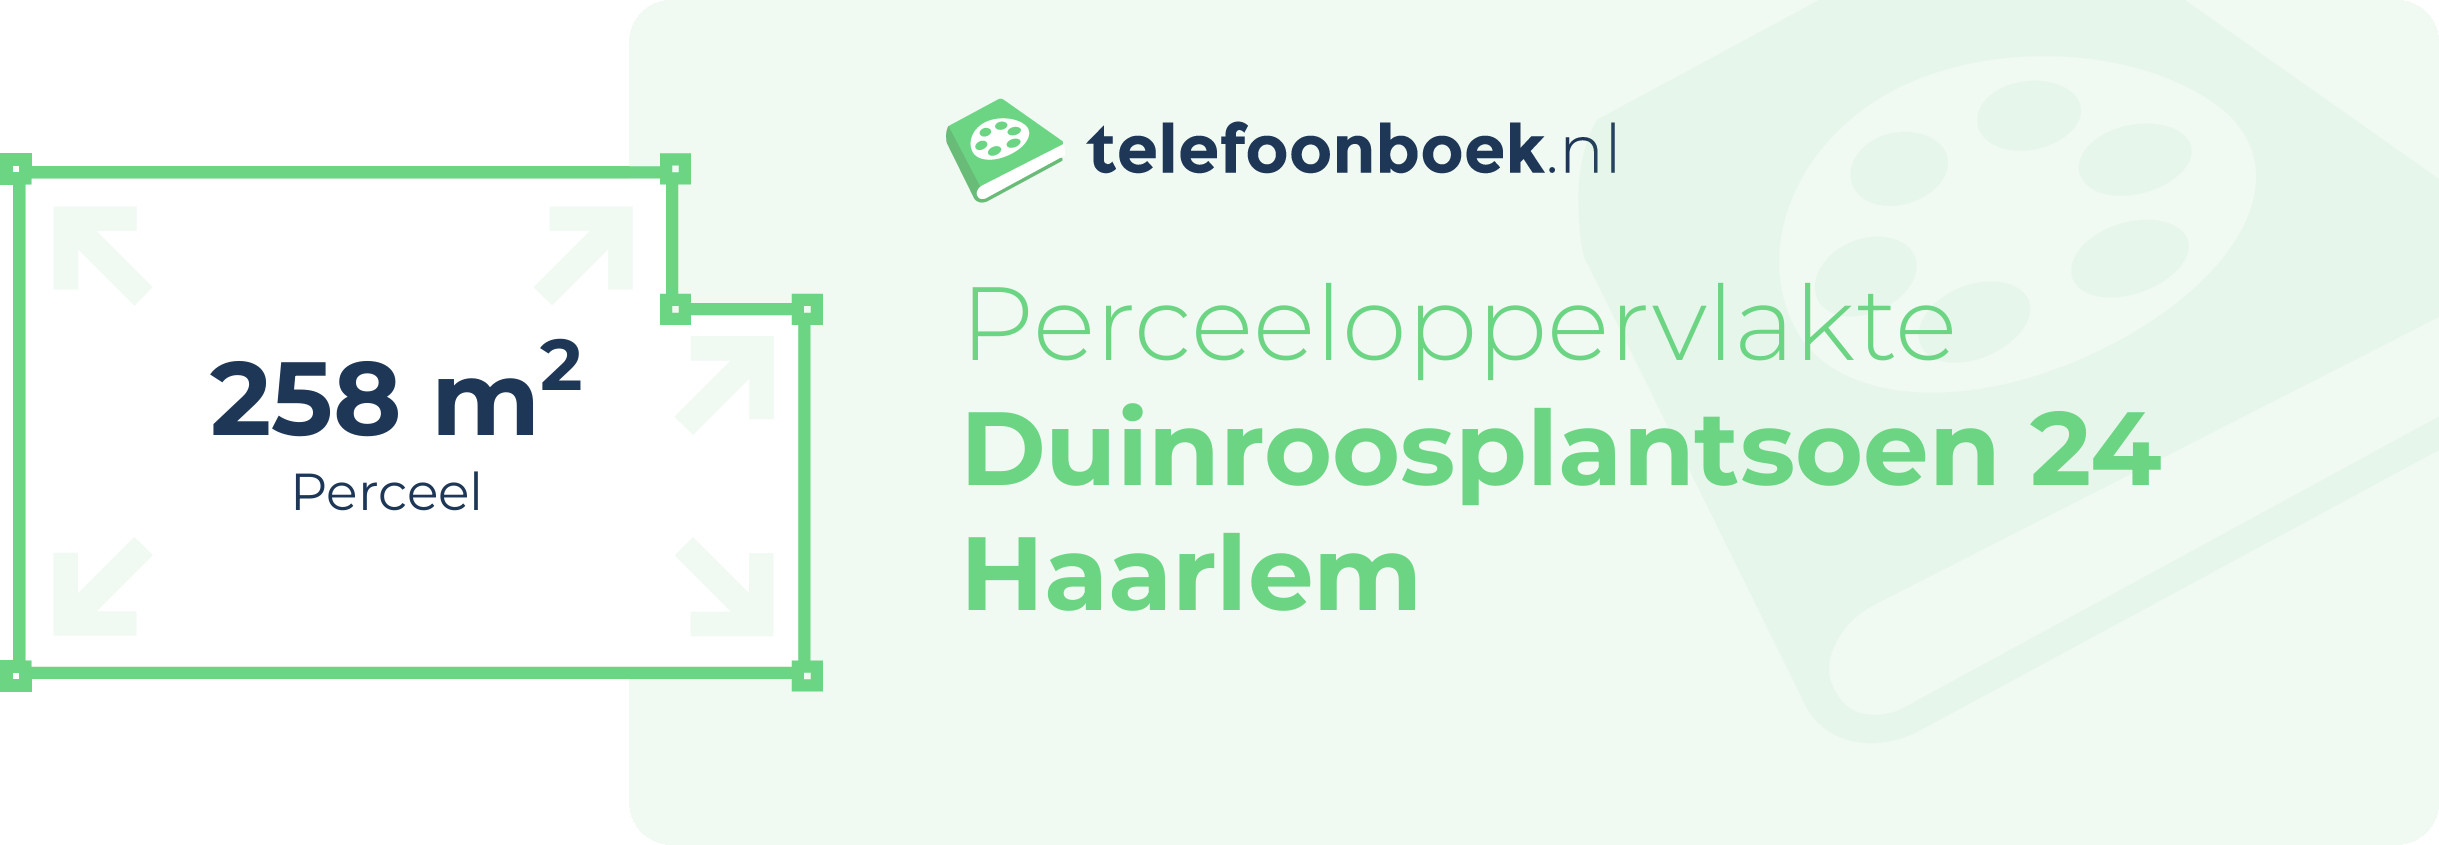 Perceeloppervlakte Duinroosplantsoen 24 Haarlem